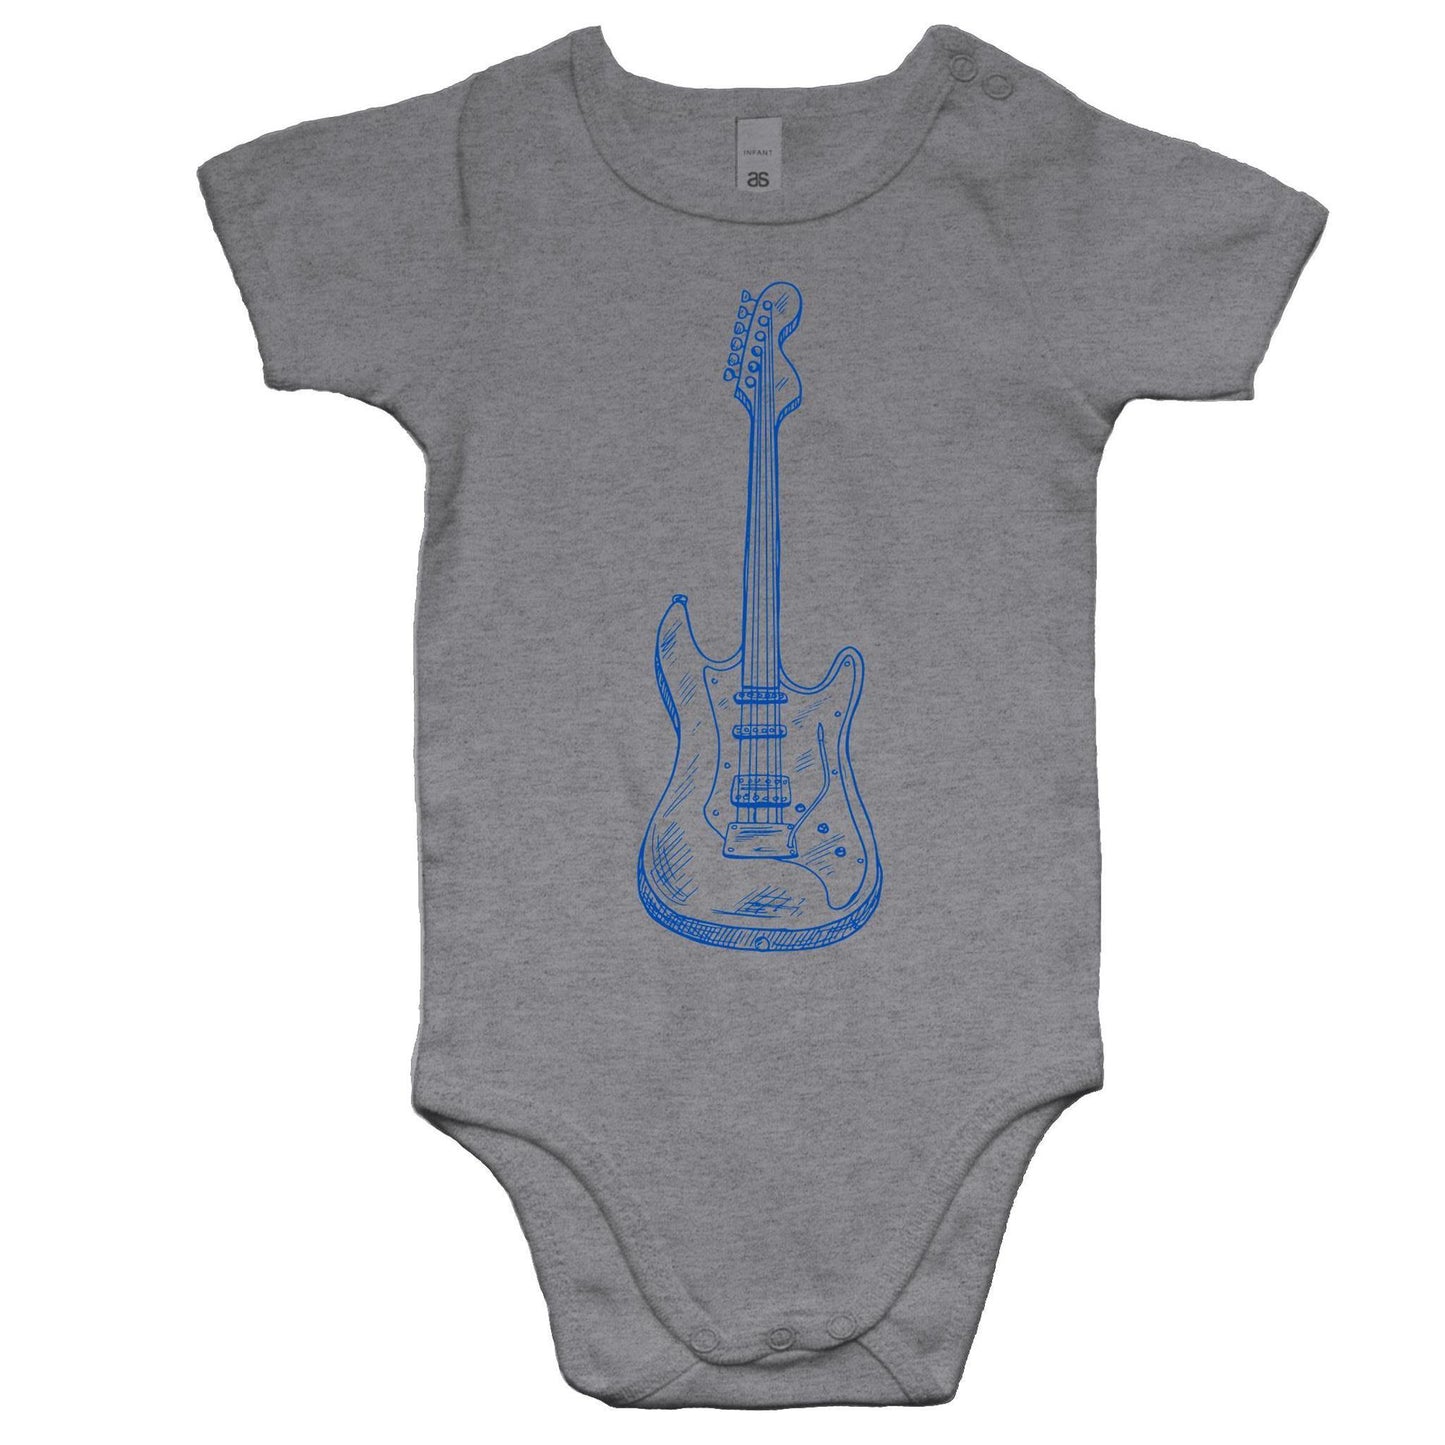 Guitar - Baby Bodysuit Grey Marle Baby Bodysuit kids Music